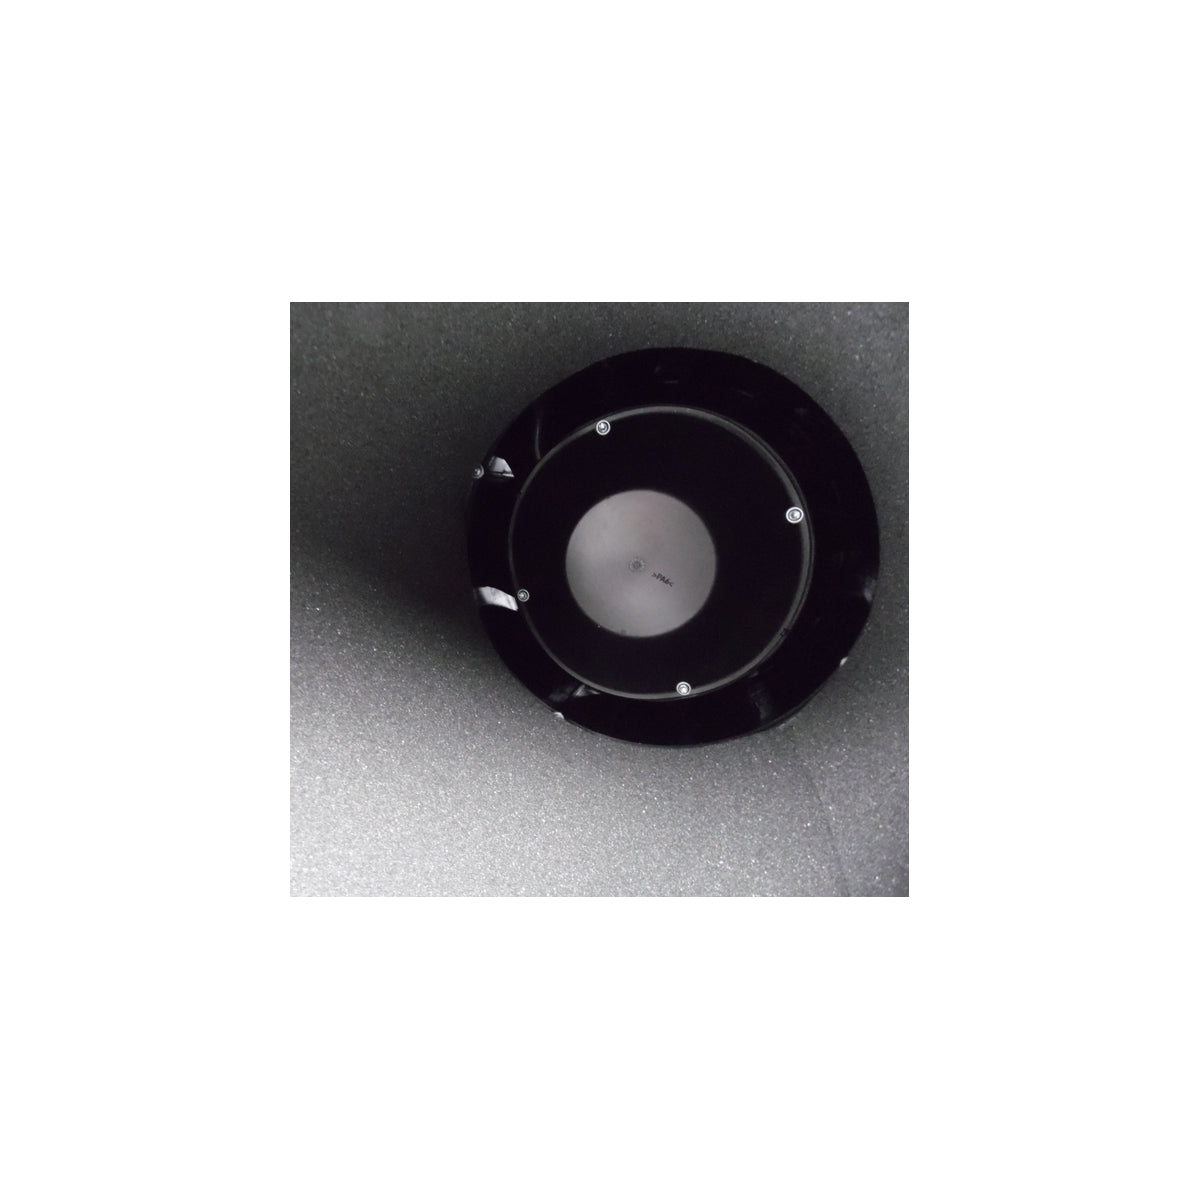 1-Gang-Absaugung ISO-Max 2310 m3/h – 250 mm – Can-Fan